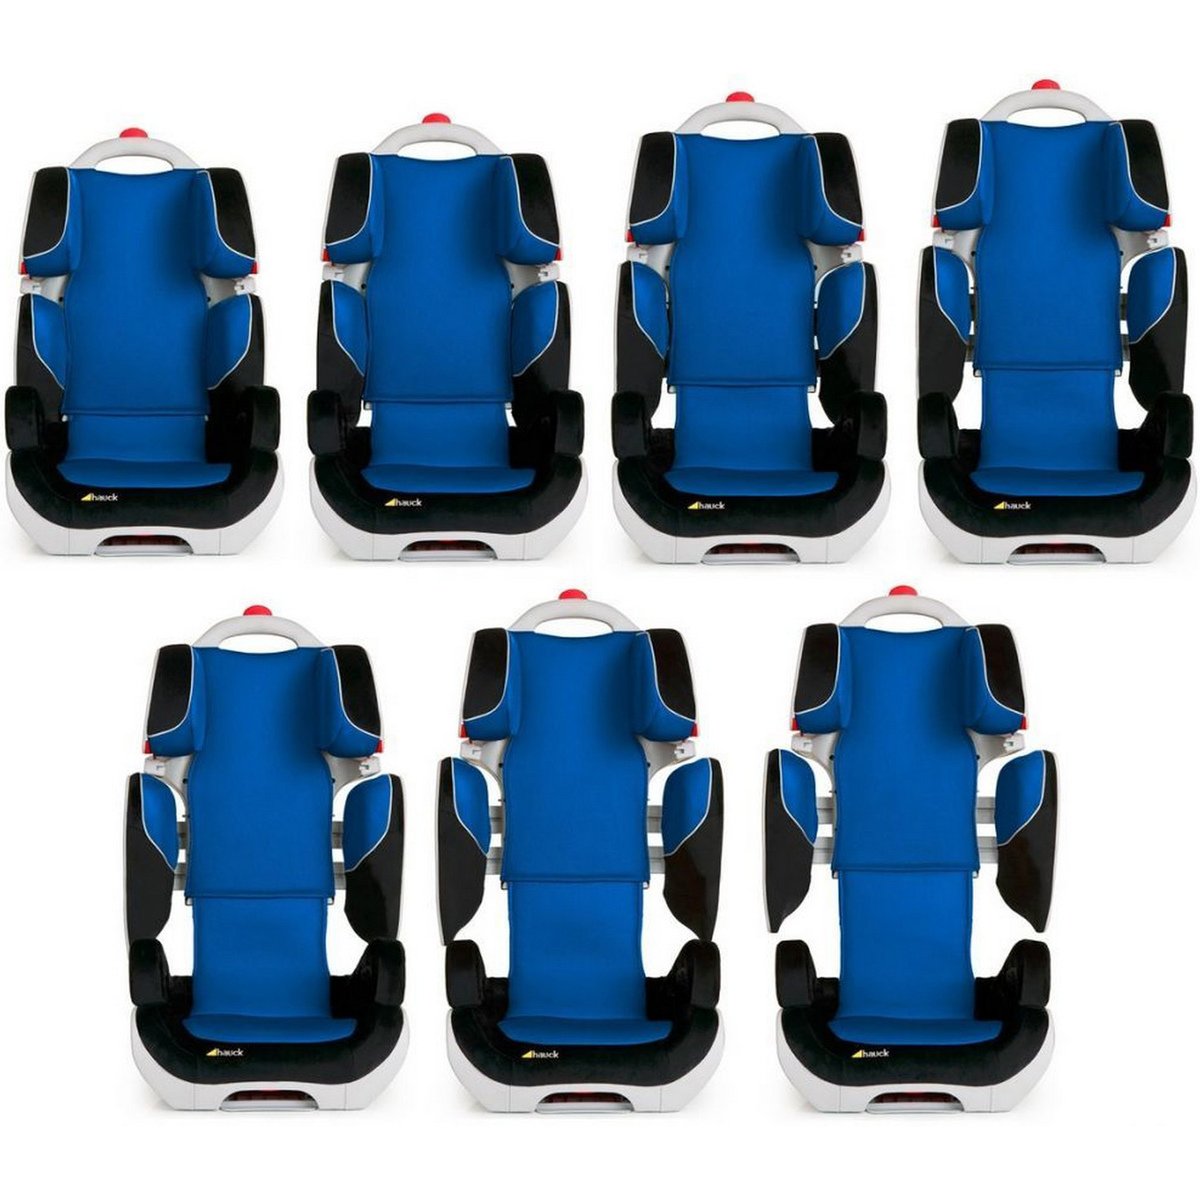 Hauck Bodyguard Car Seat for Children 610275 Black/Blue